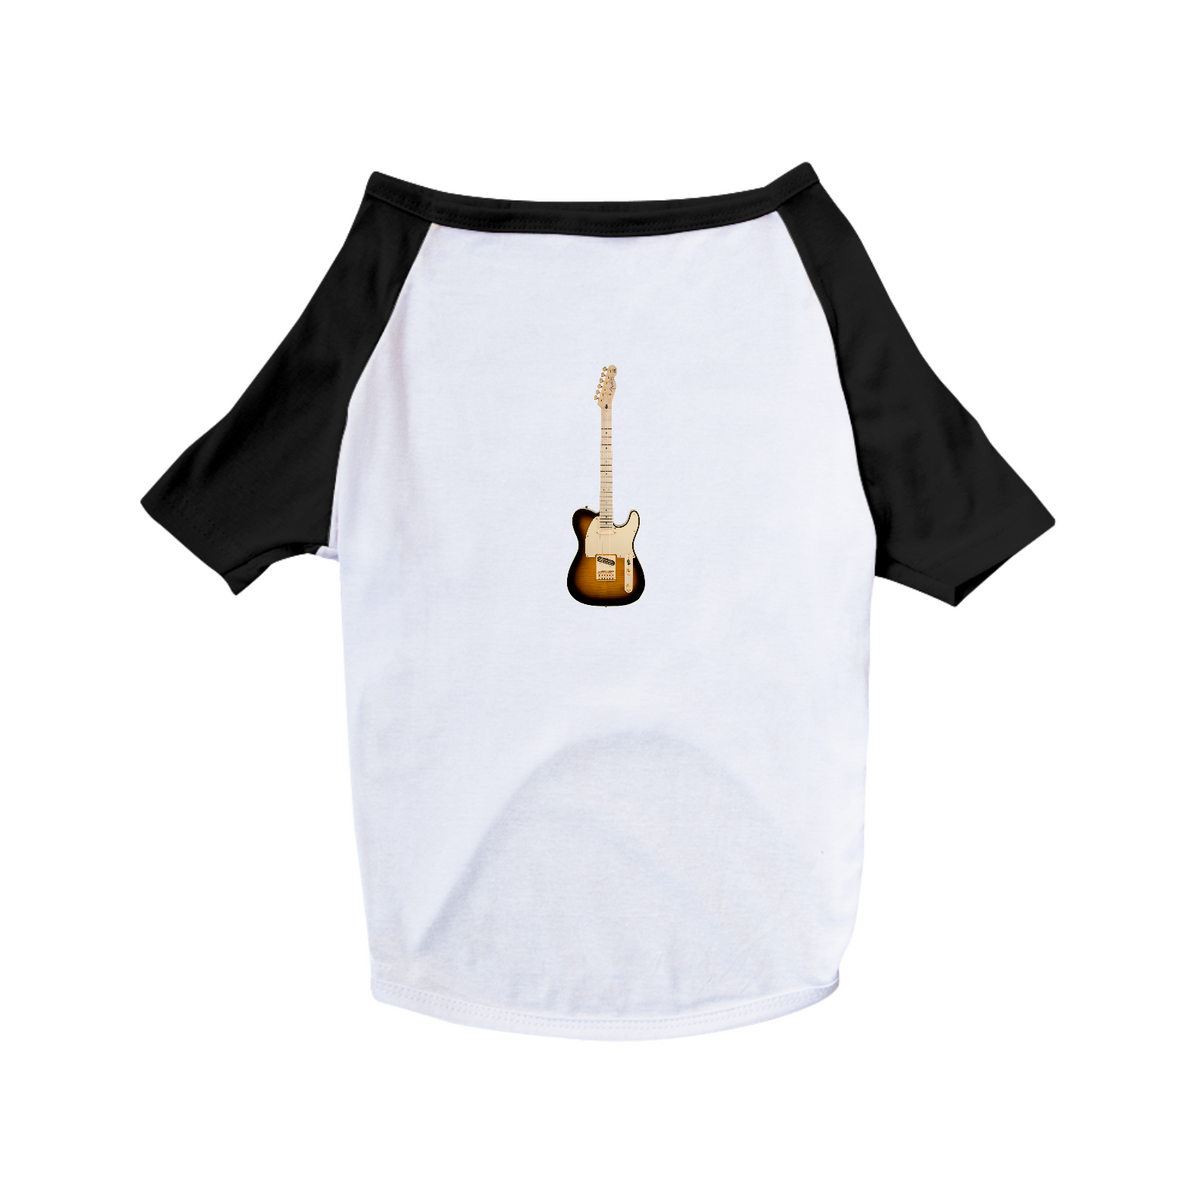 Nome do produto: Camisa Pet Dog - Guitarra Fender Telecaster Richie Kotzen Siganture Tobacco Burst - Model 1